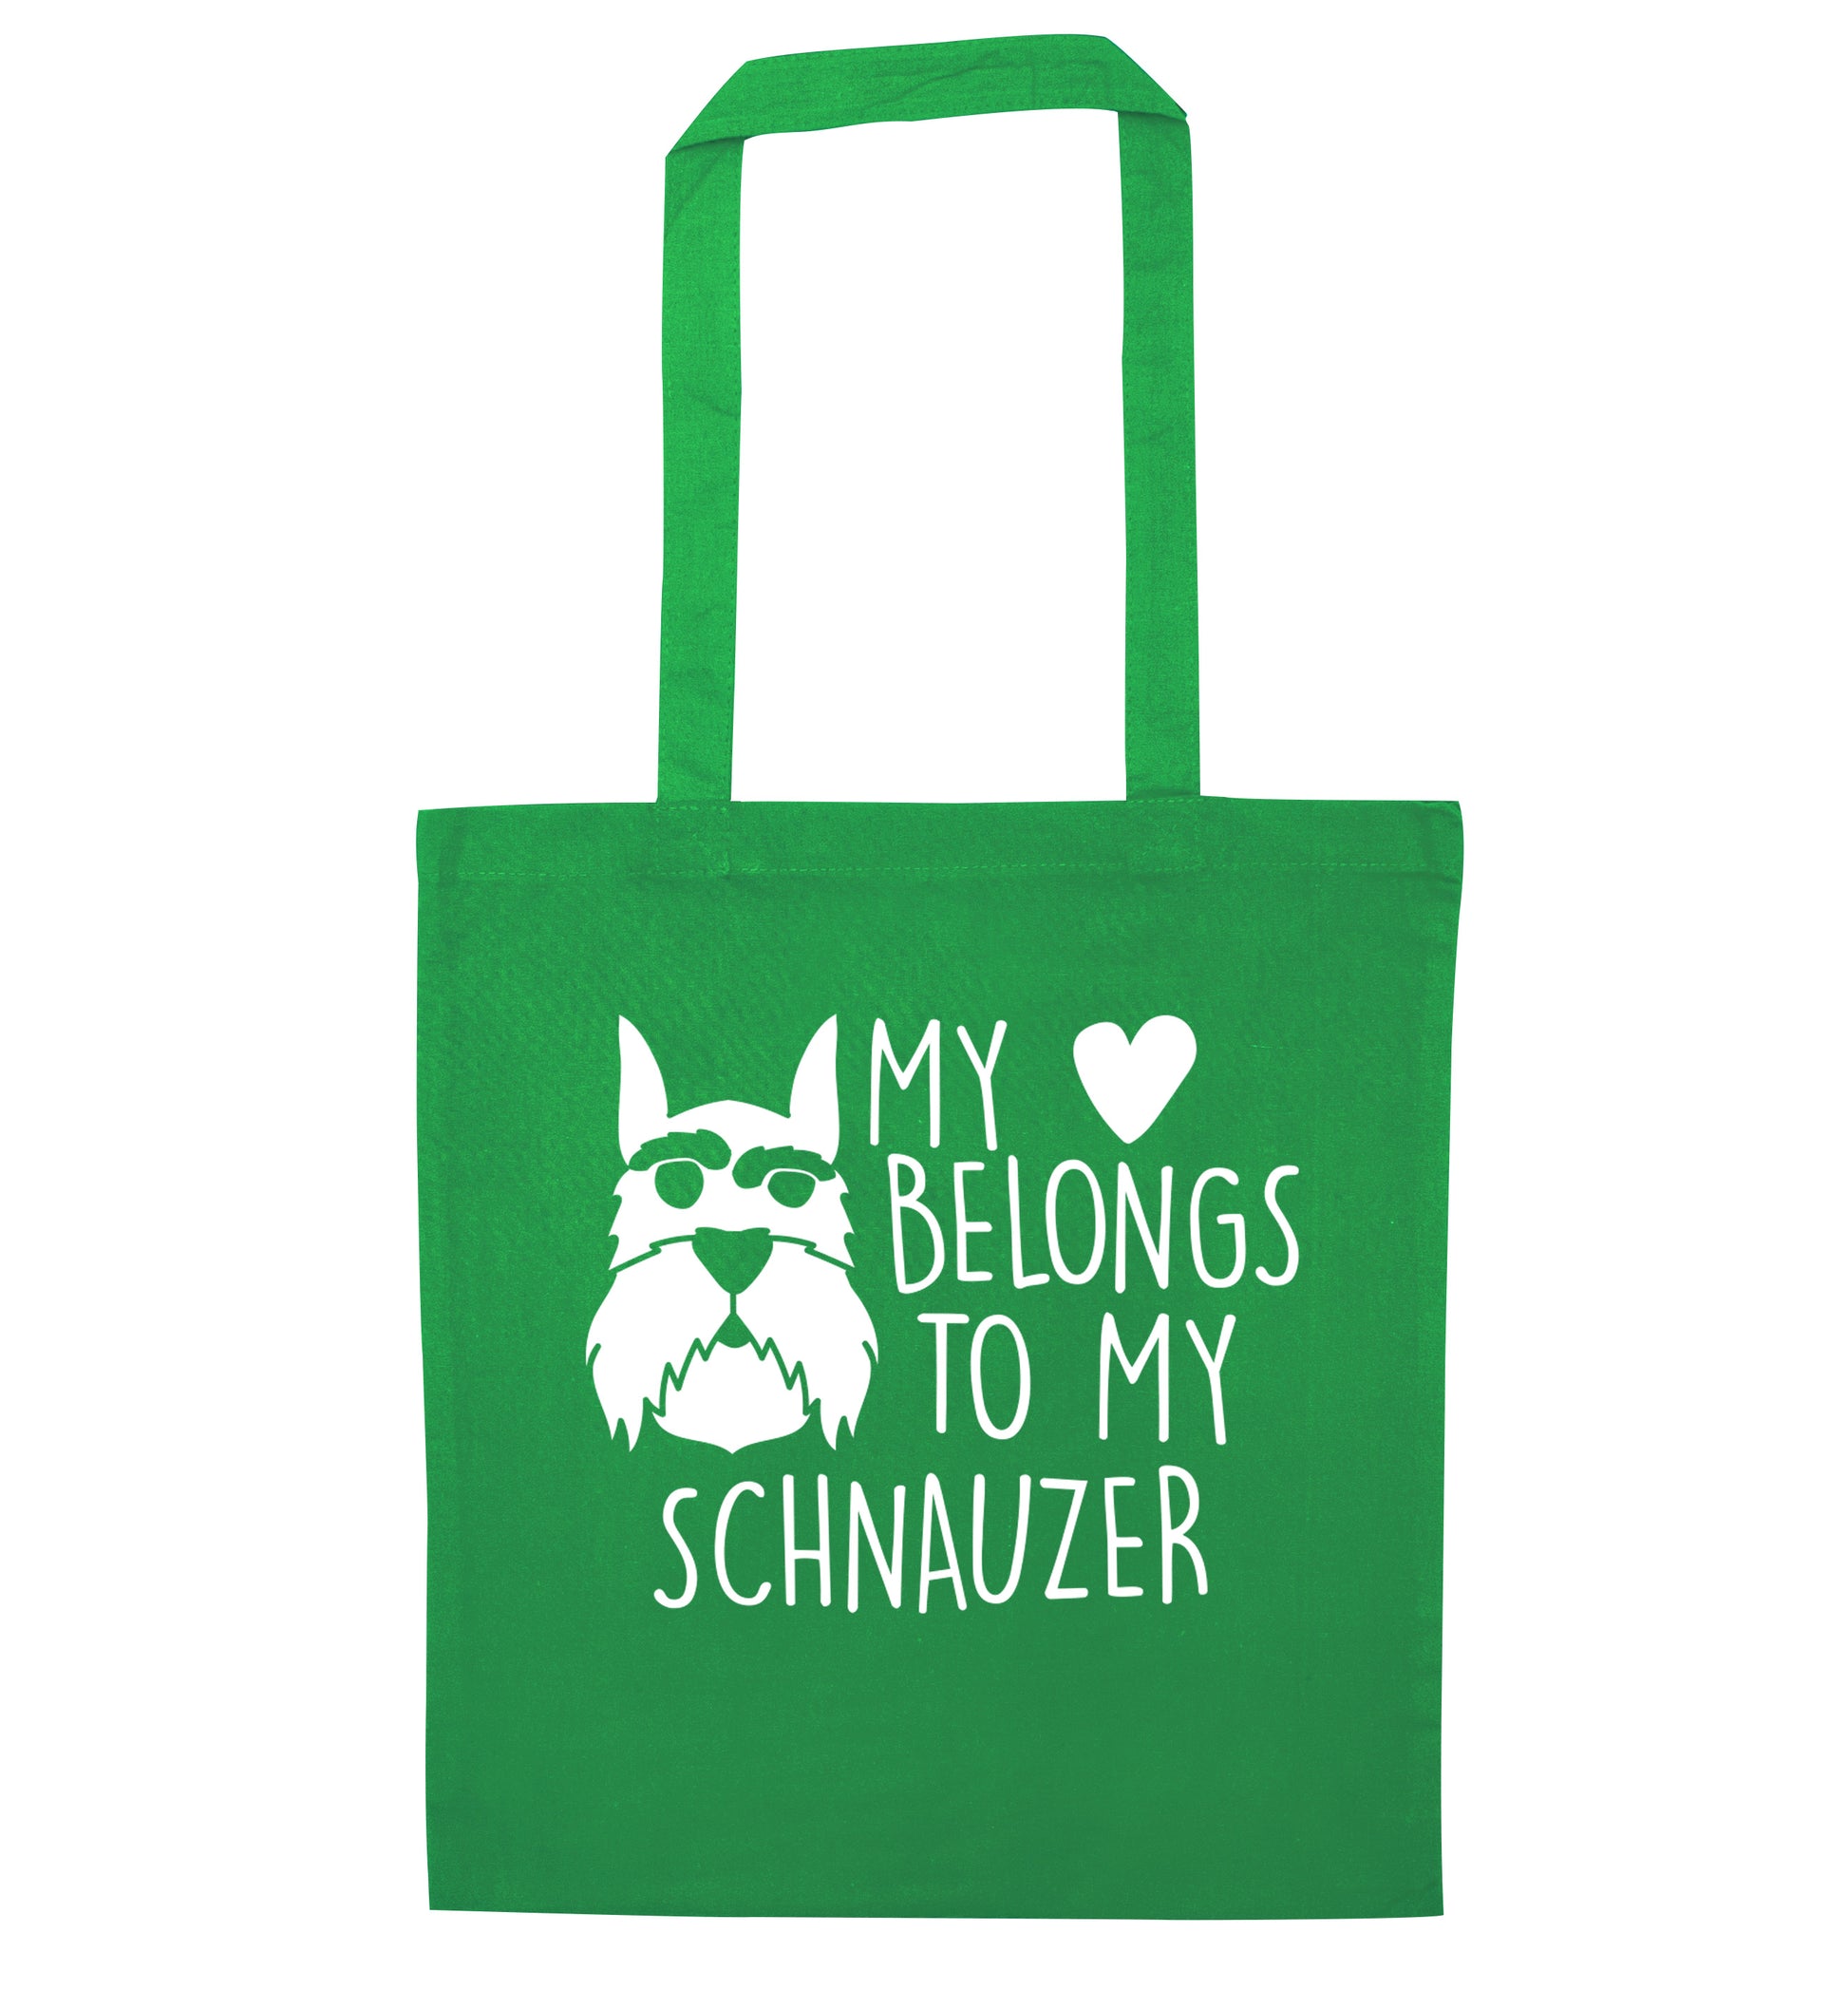 My heart belongs to my schnauzer green tote bag